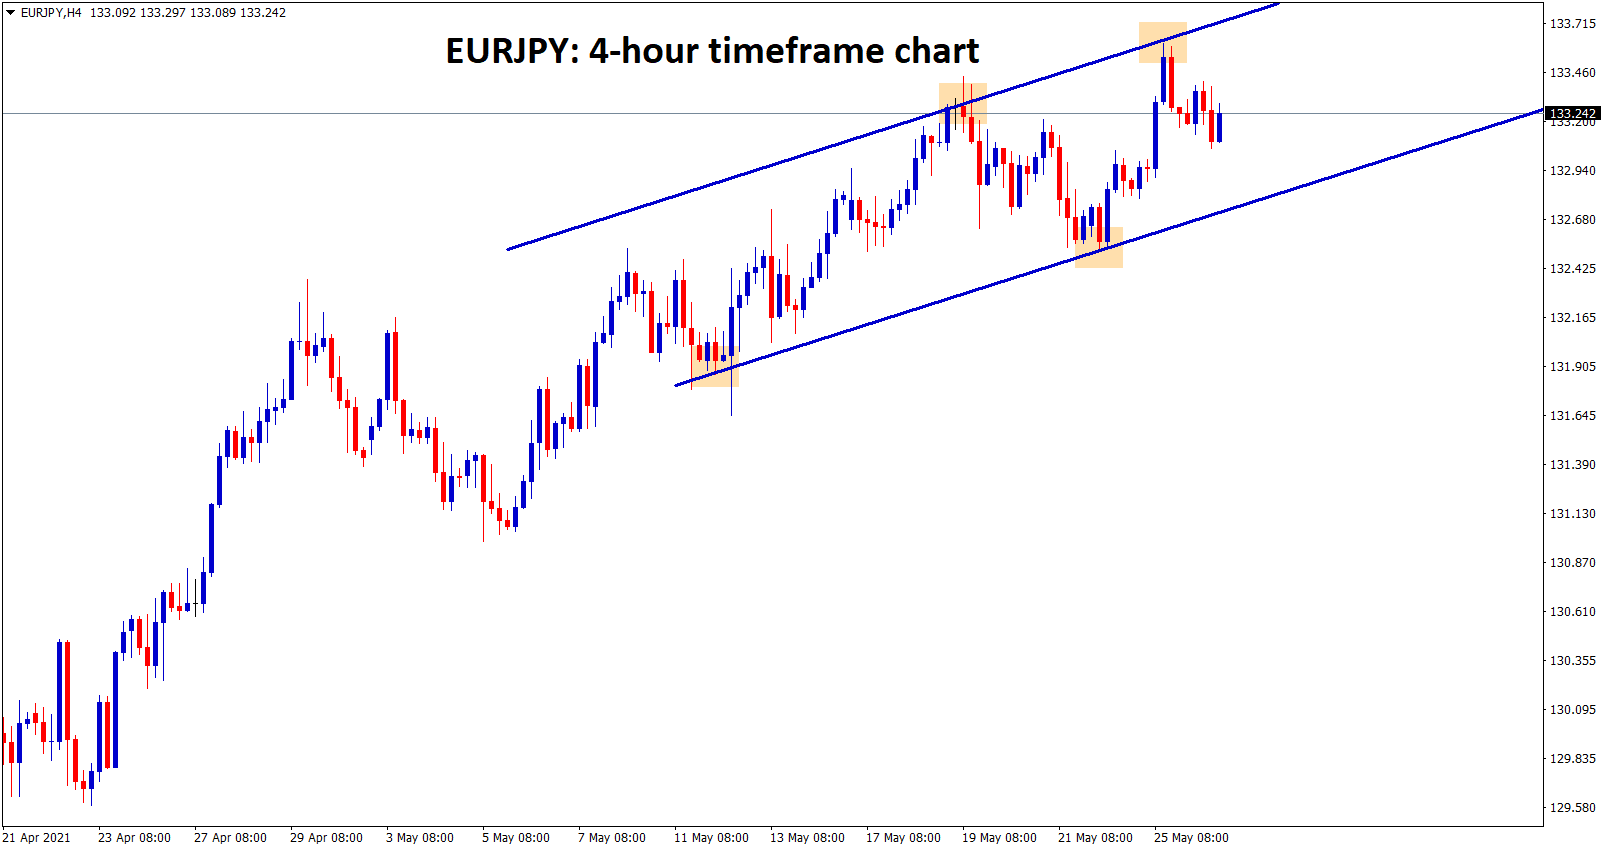 EURJPY moving in an ascending channel range